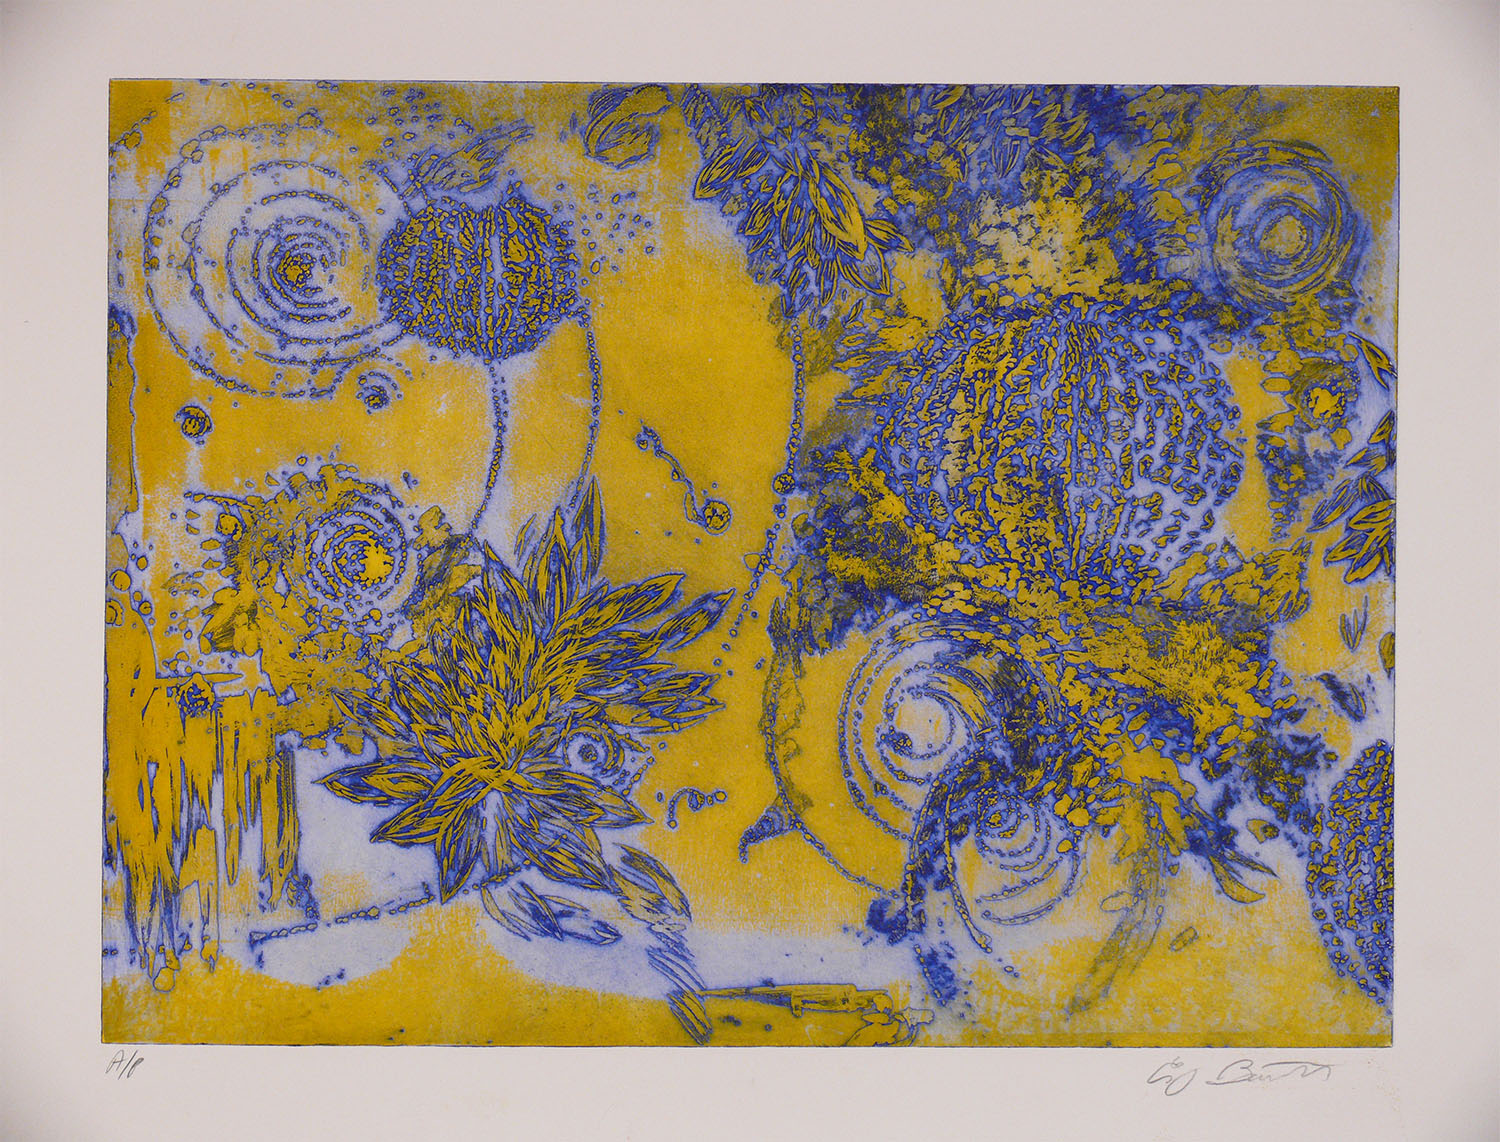  Microcosms, Yellow Blue, 2006, Viscosity Etching, 22 x 30 